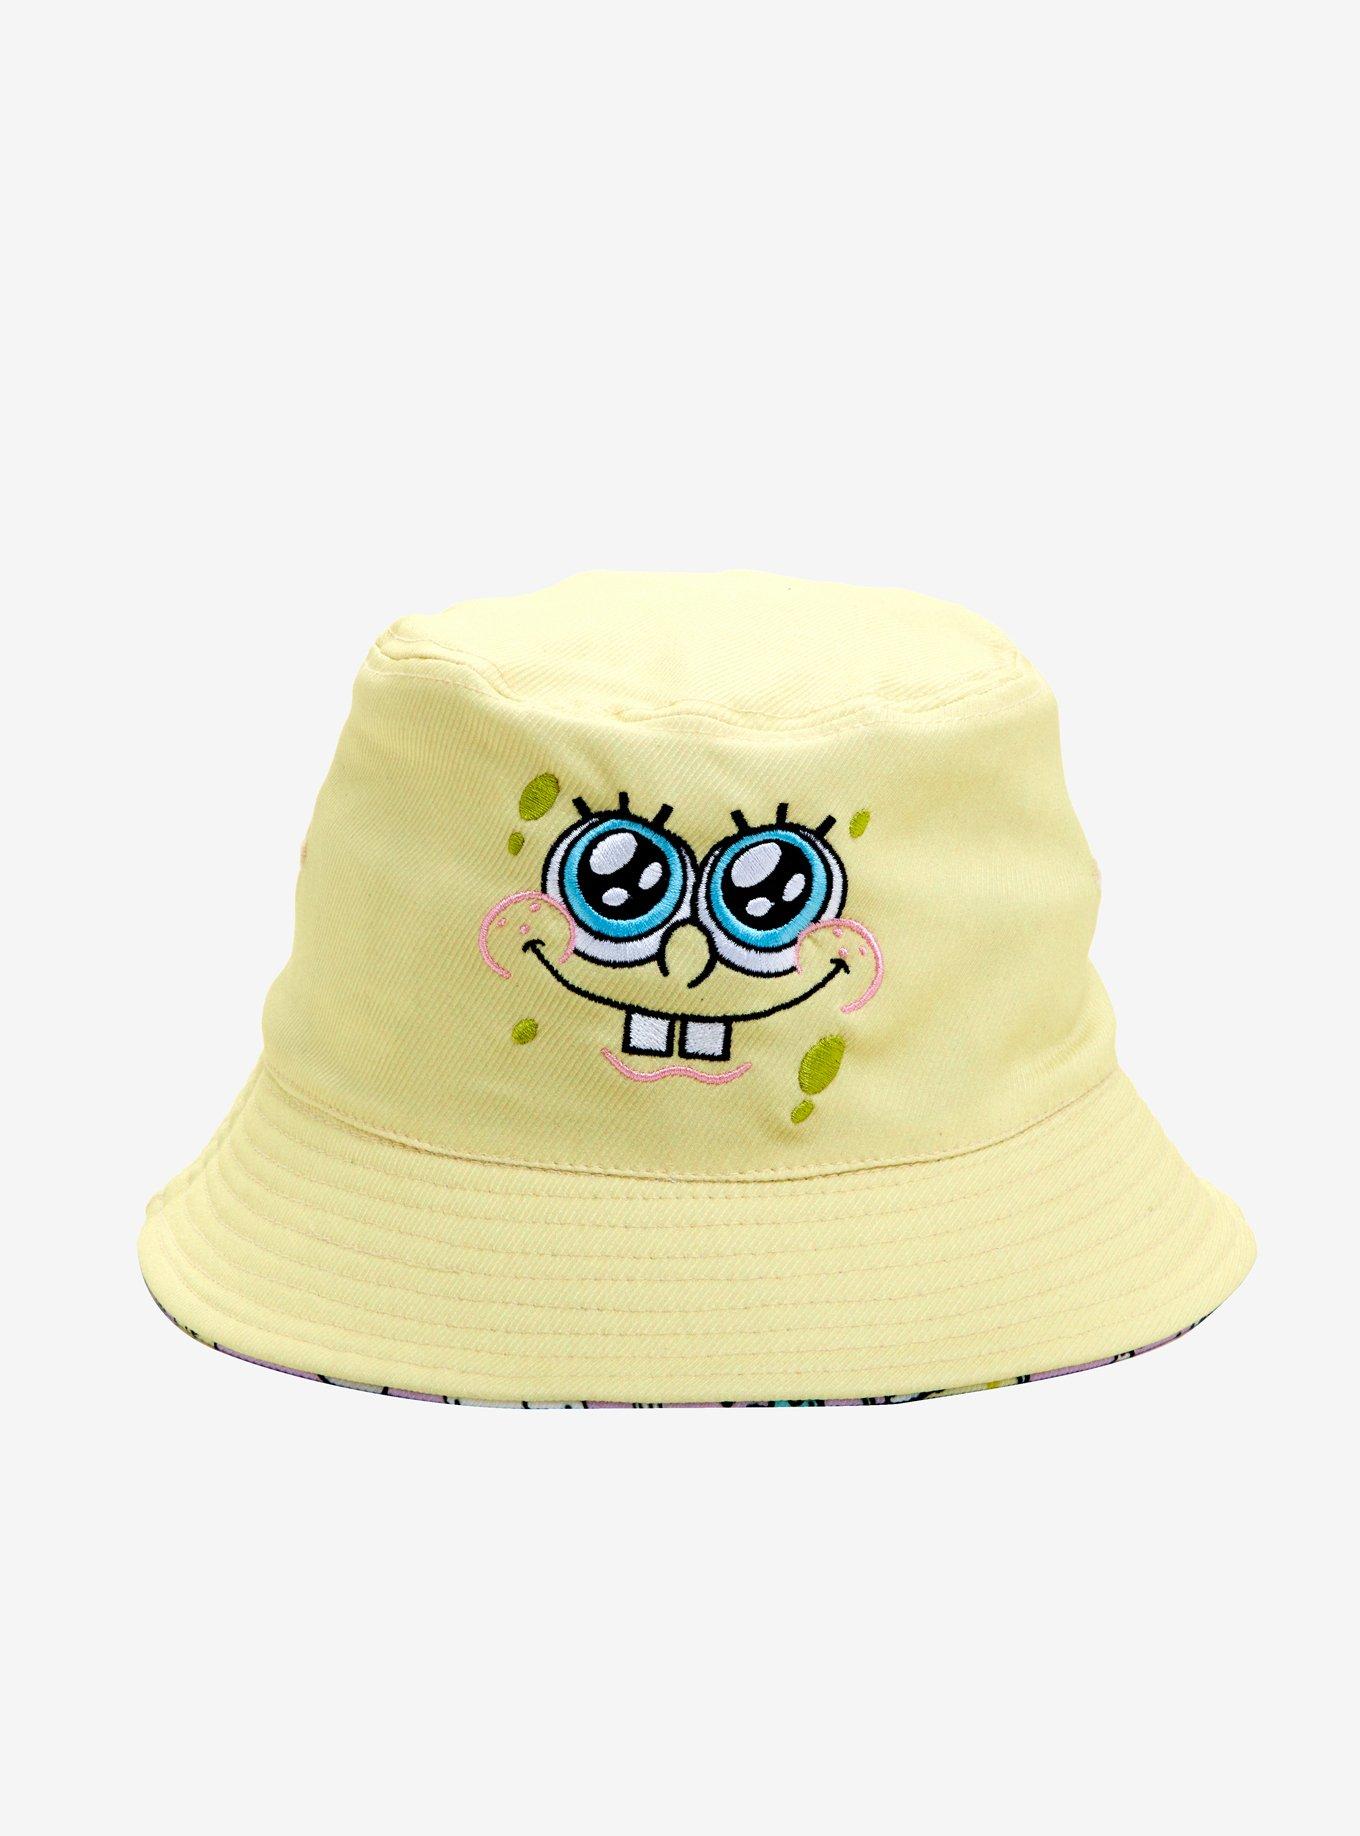 SpongeBob Squarepants Reversible Bucket Hat, , hi-res